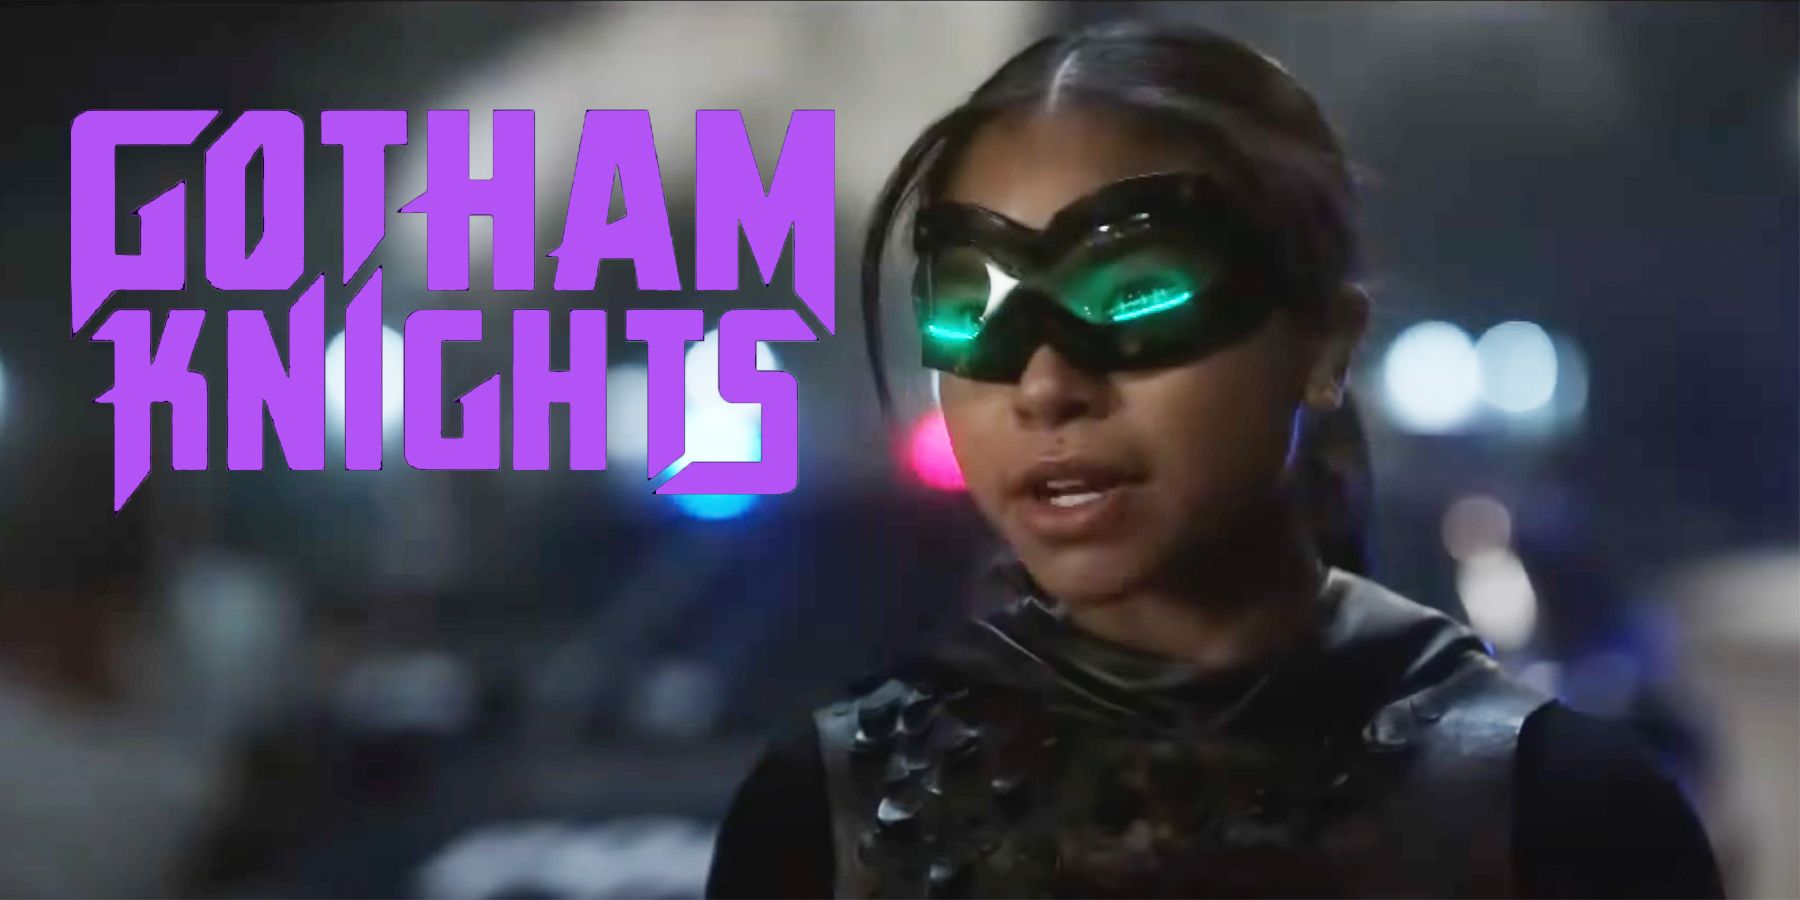 Gotham Knights New Trailer